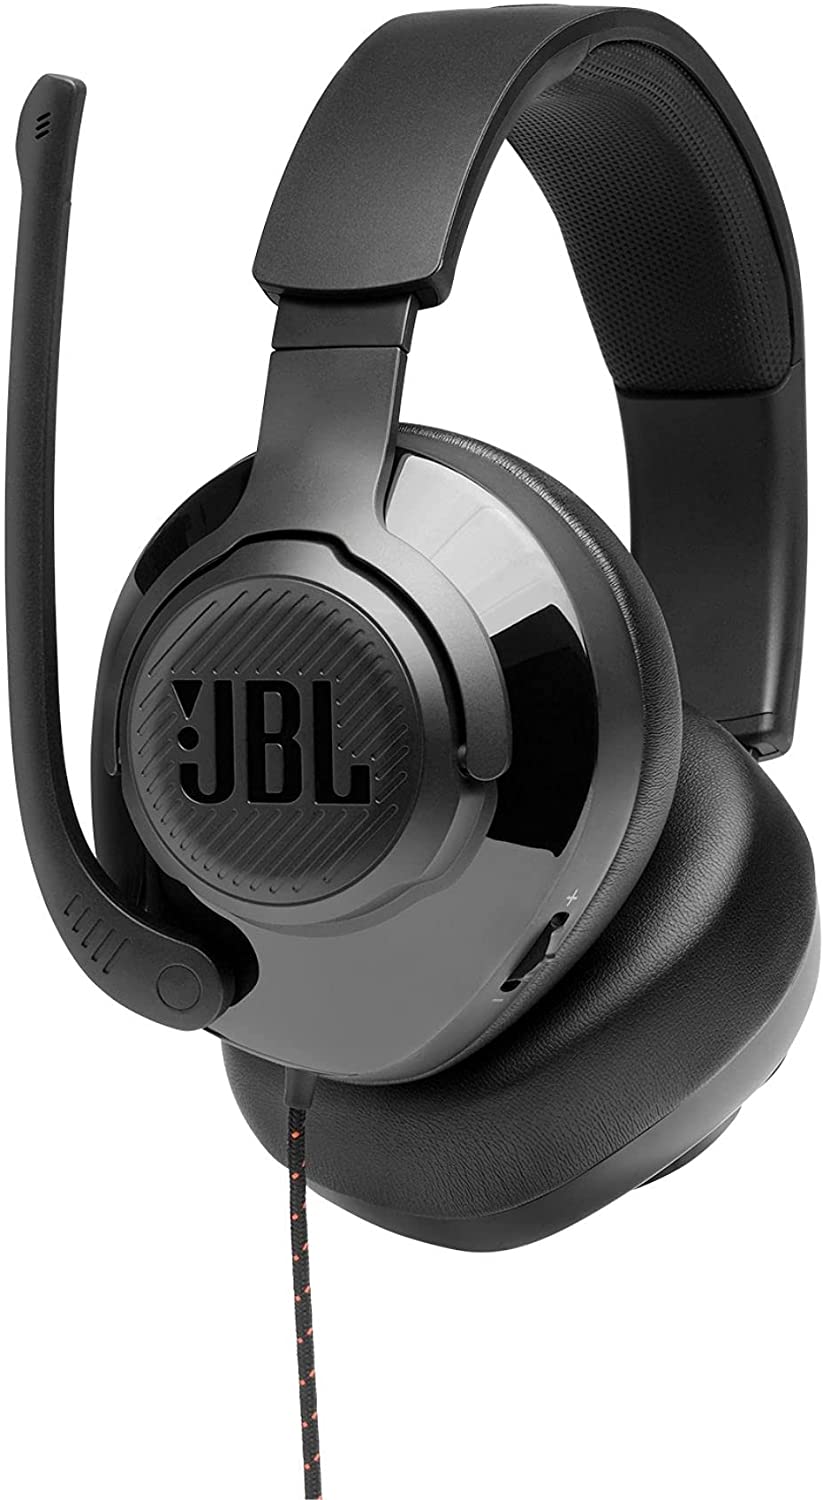 JBL Quantum 200 Wired Gaming Headset - JBLQUANTUM200BLKAM